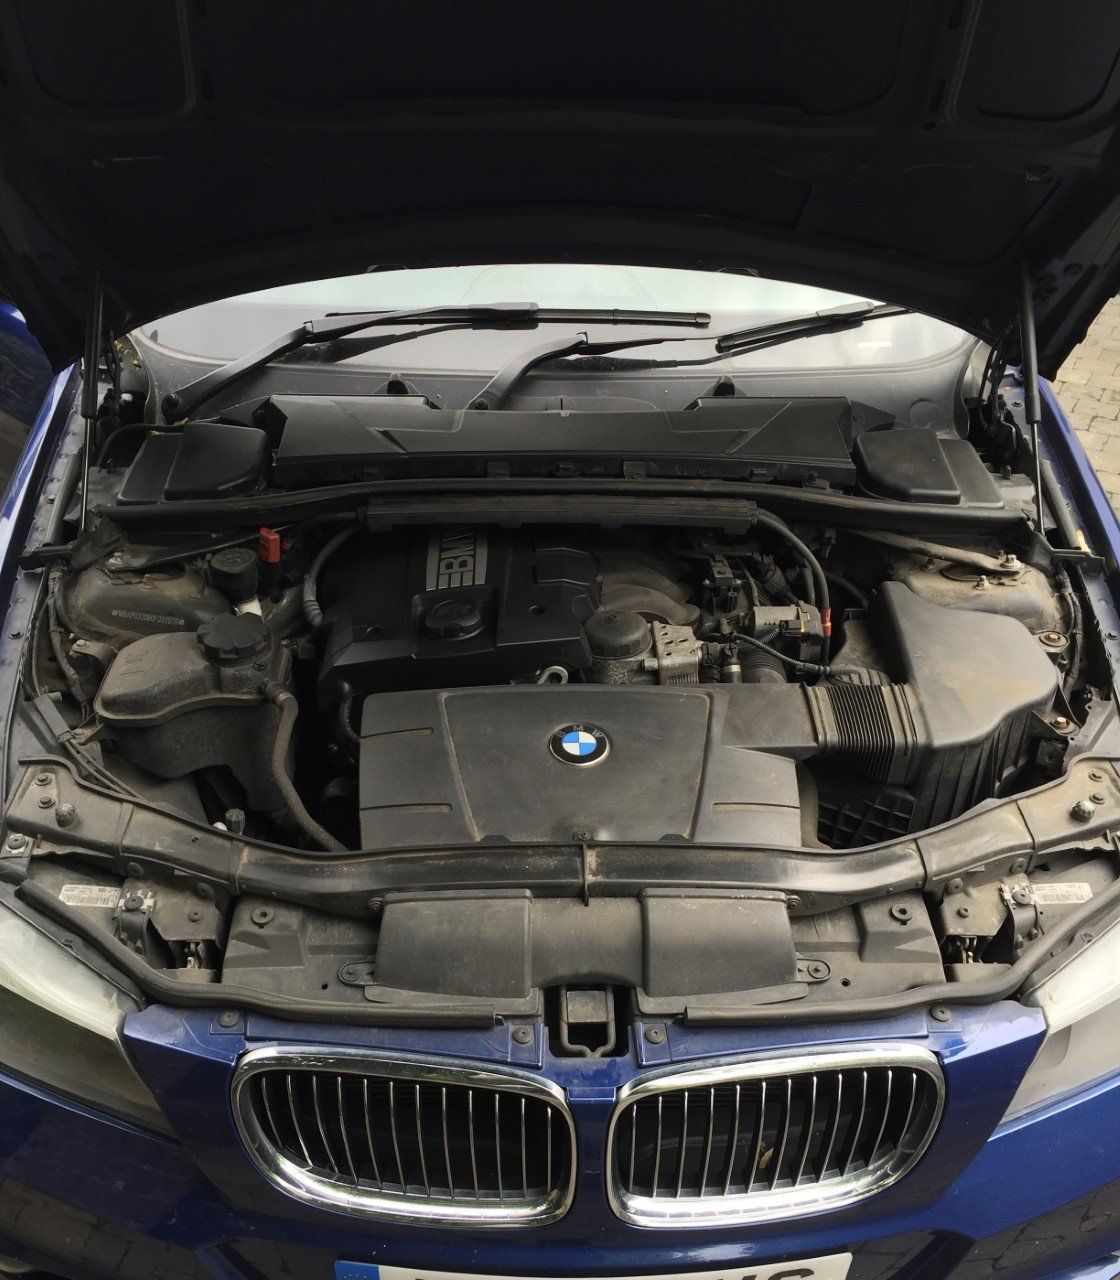 Dirty BMW Engine